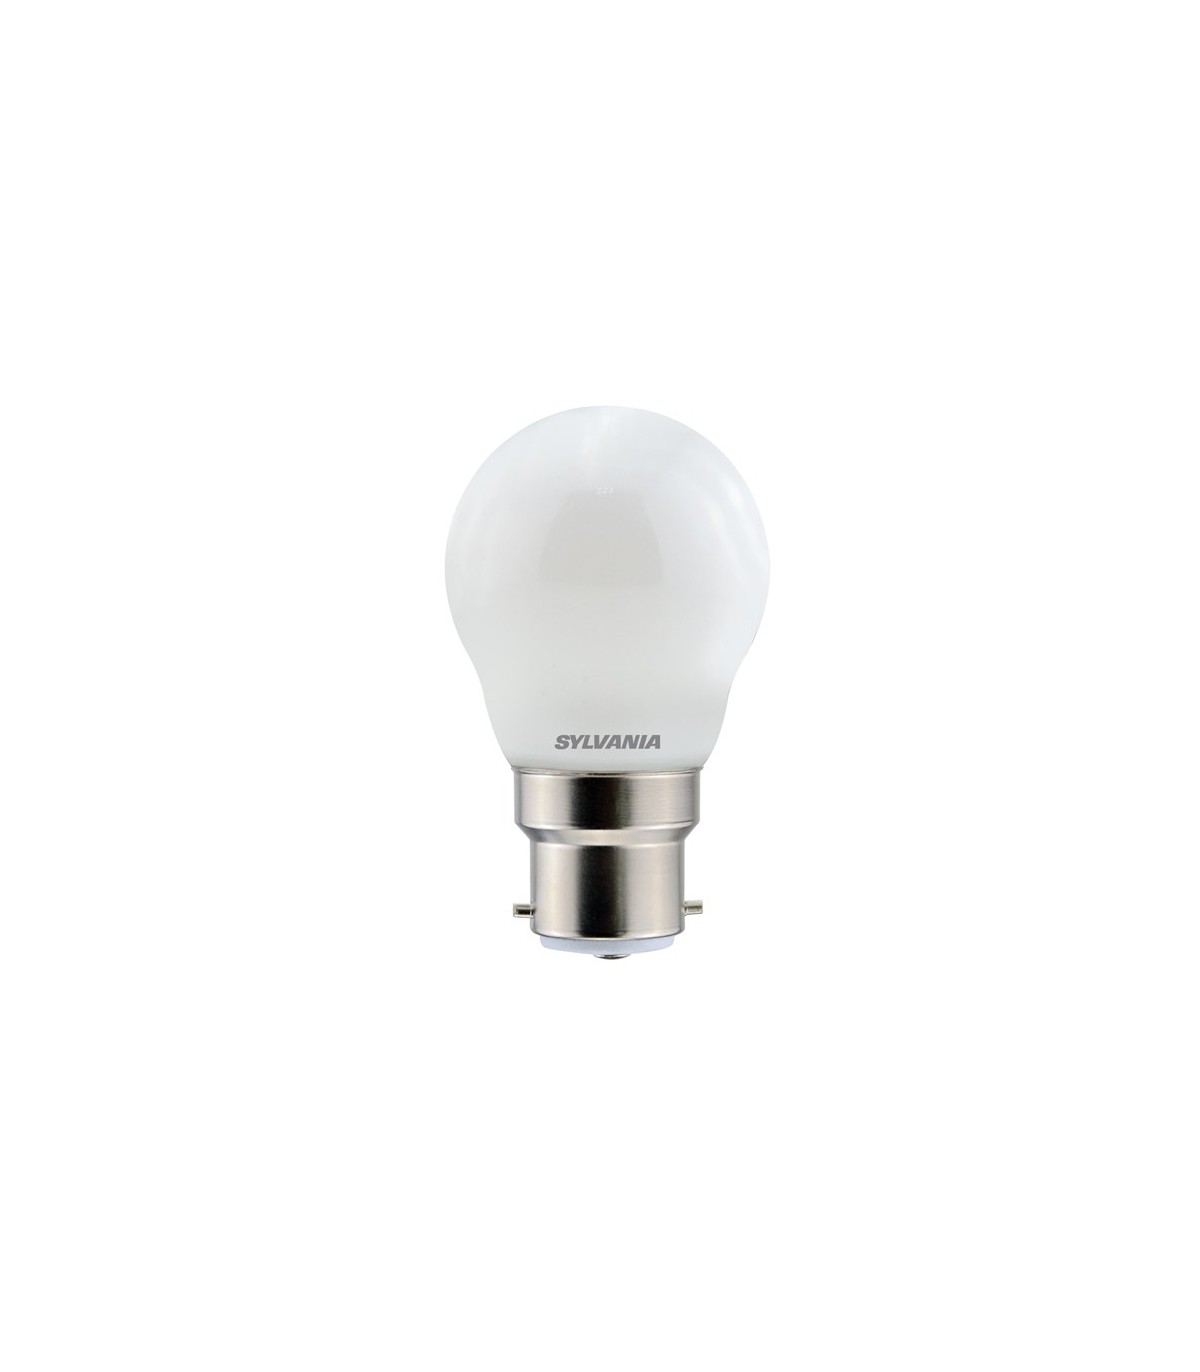 7 Watt GU10 Ampoule LED, Blanc Chaud (2700K)